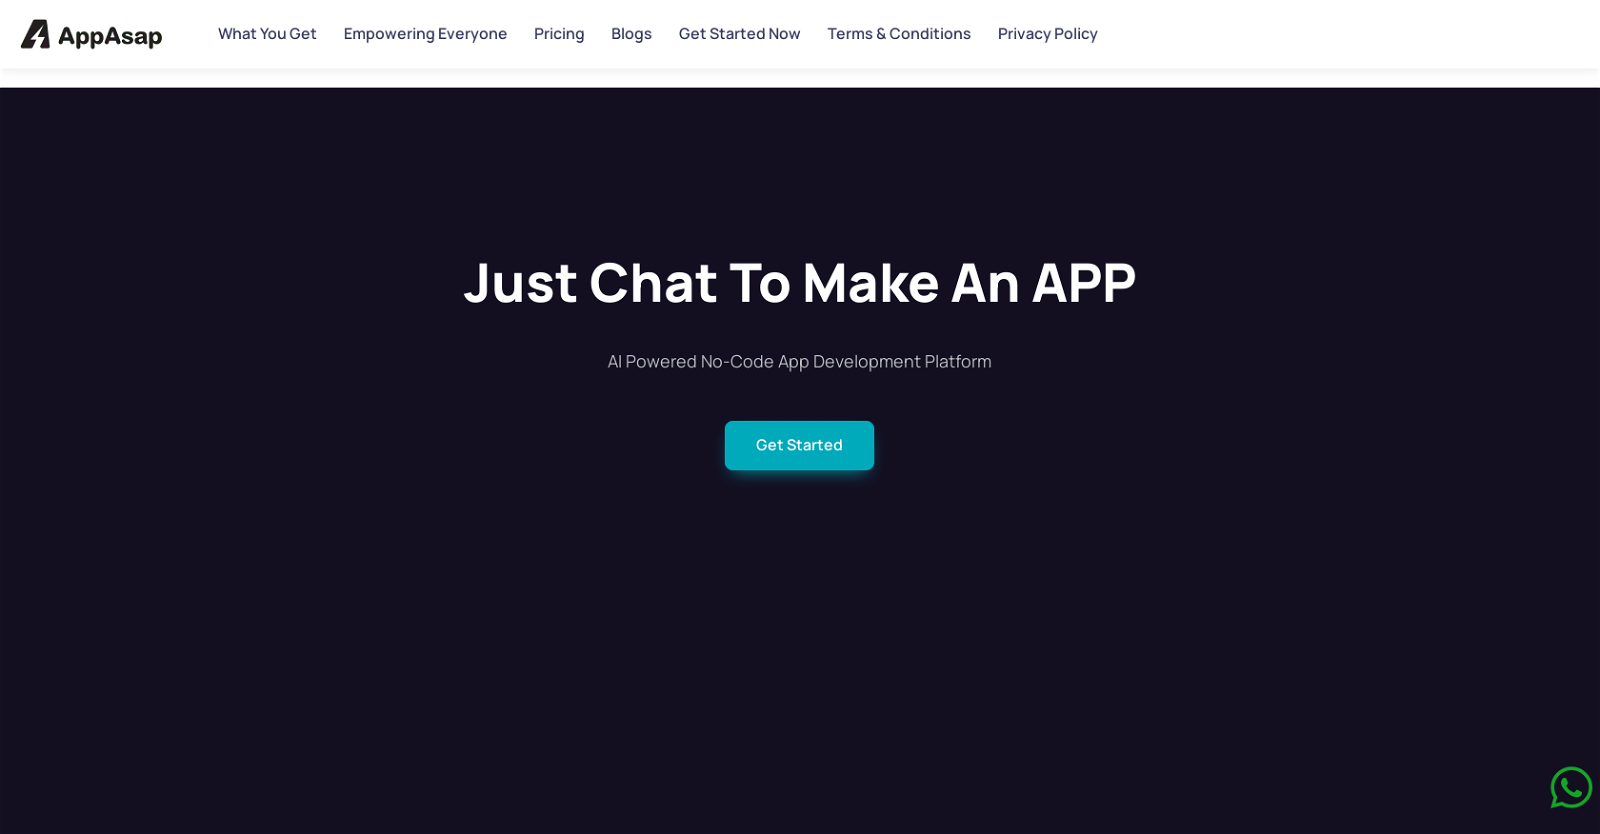 AppAsap website